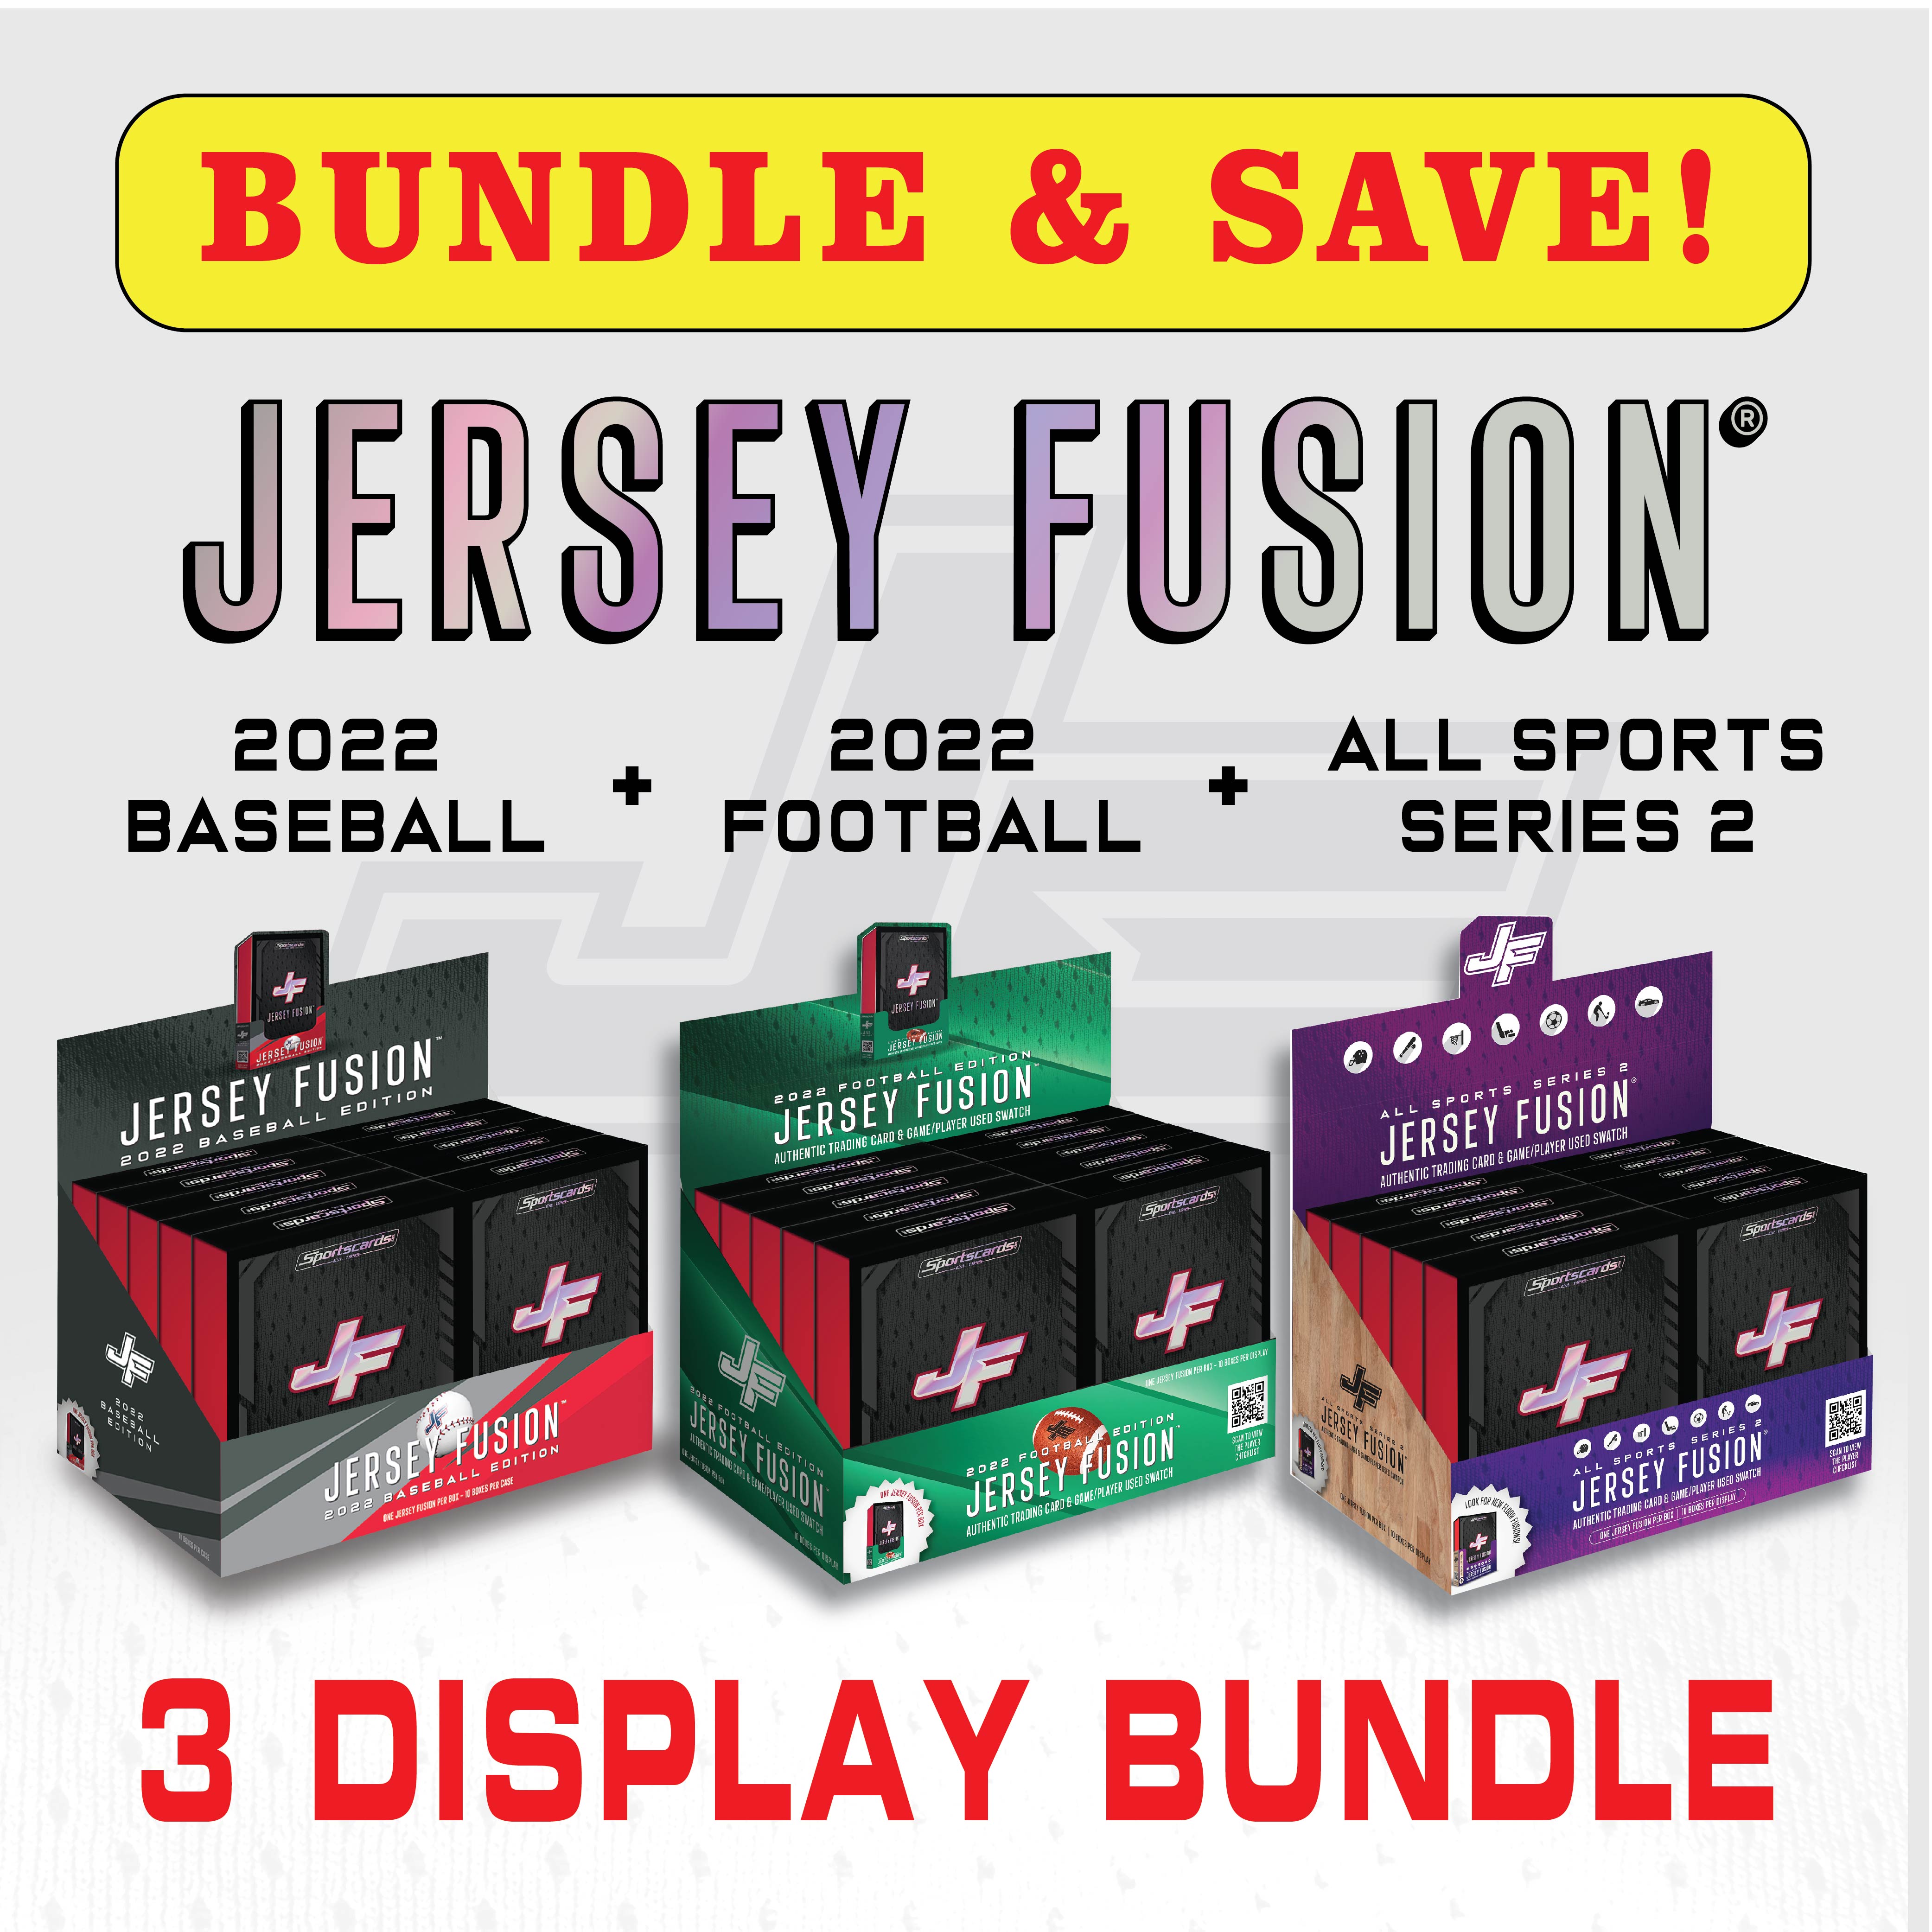 Jersey Fusion Display Bundle - (3) Displays! 2022 Baseball + 2022 Football + All Sports Series 2!